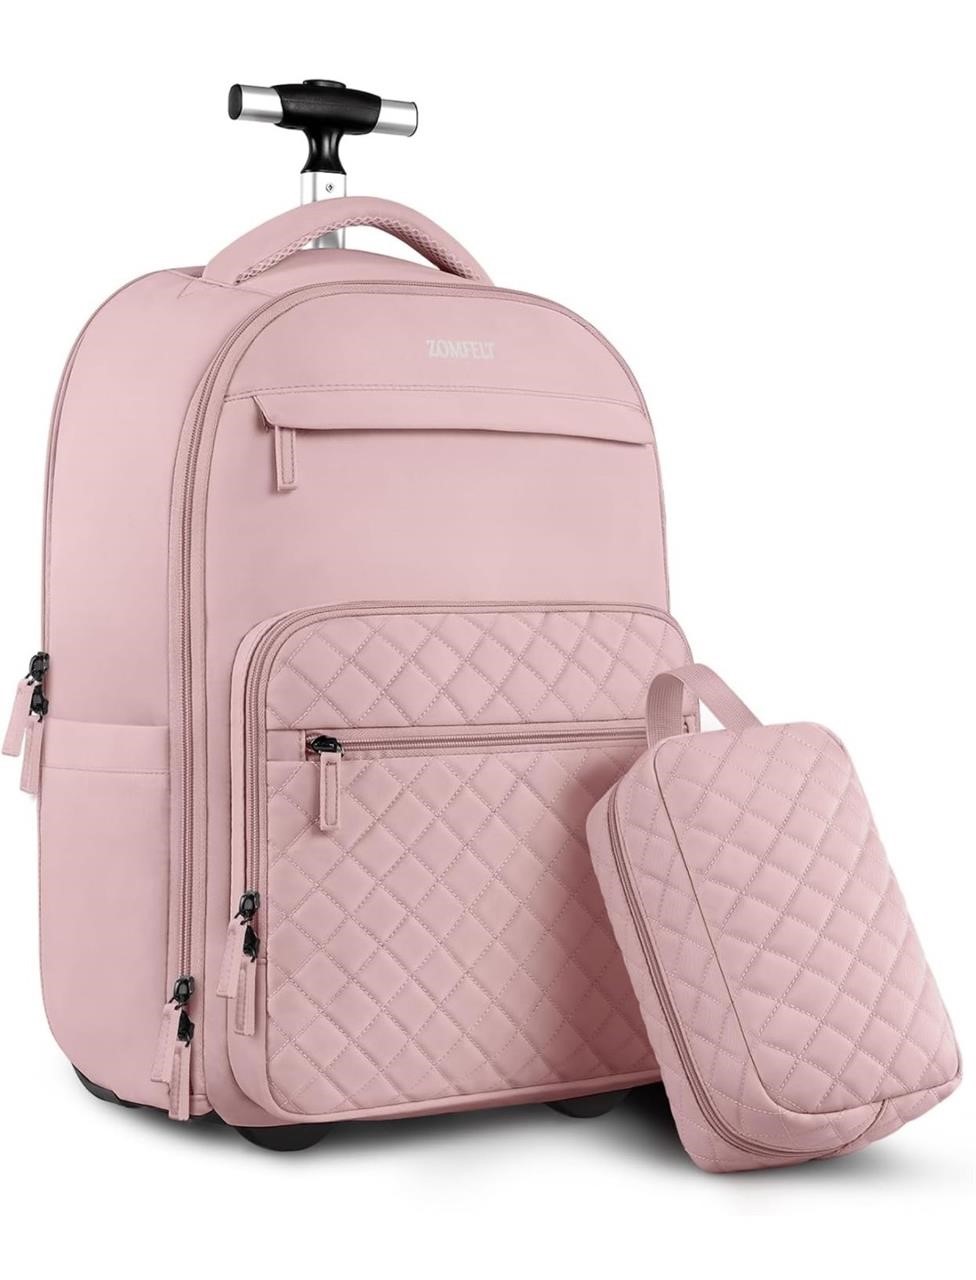 $80 ZOMFELT Rolling Backpack for Women, Travel